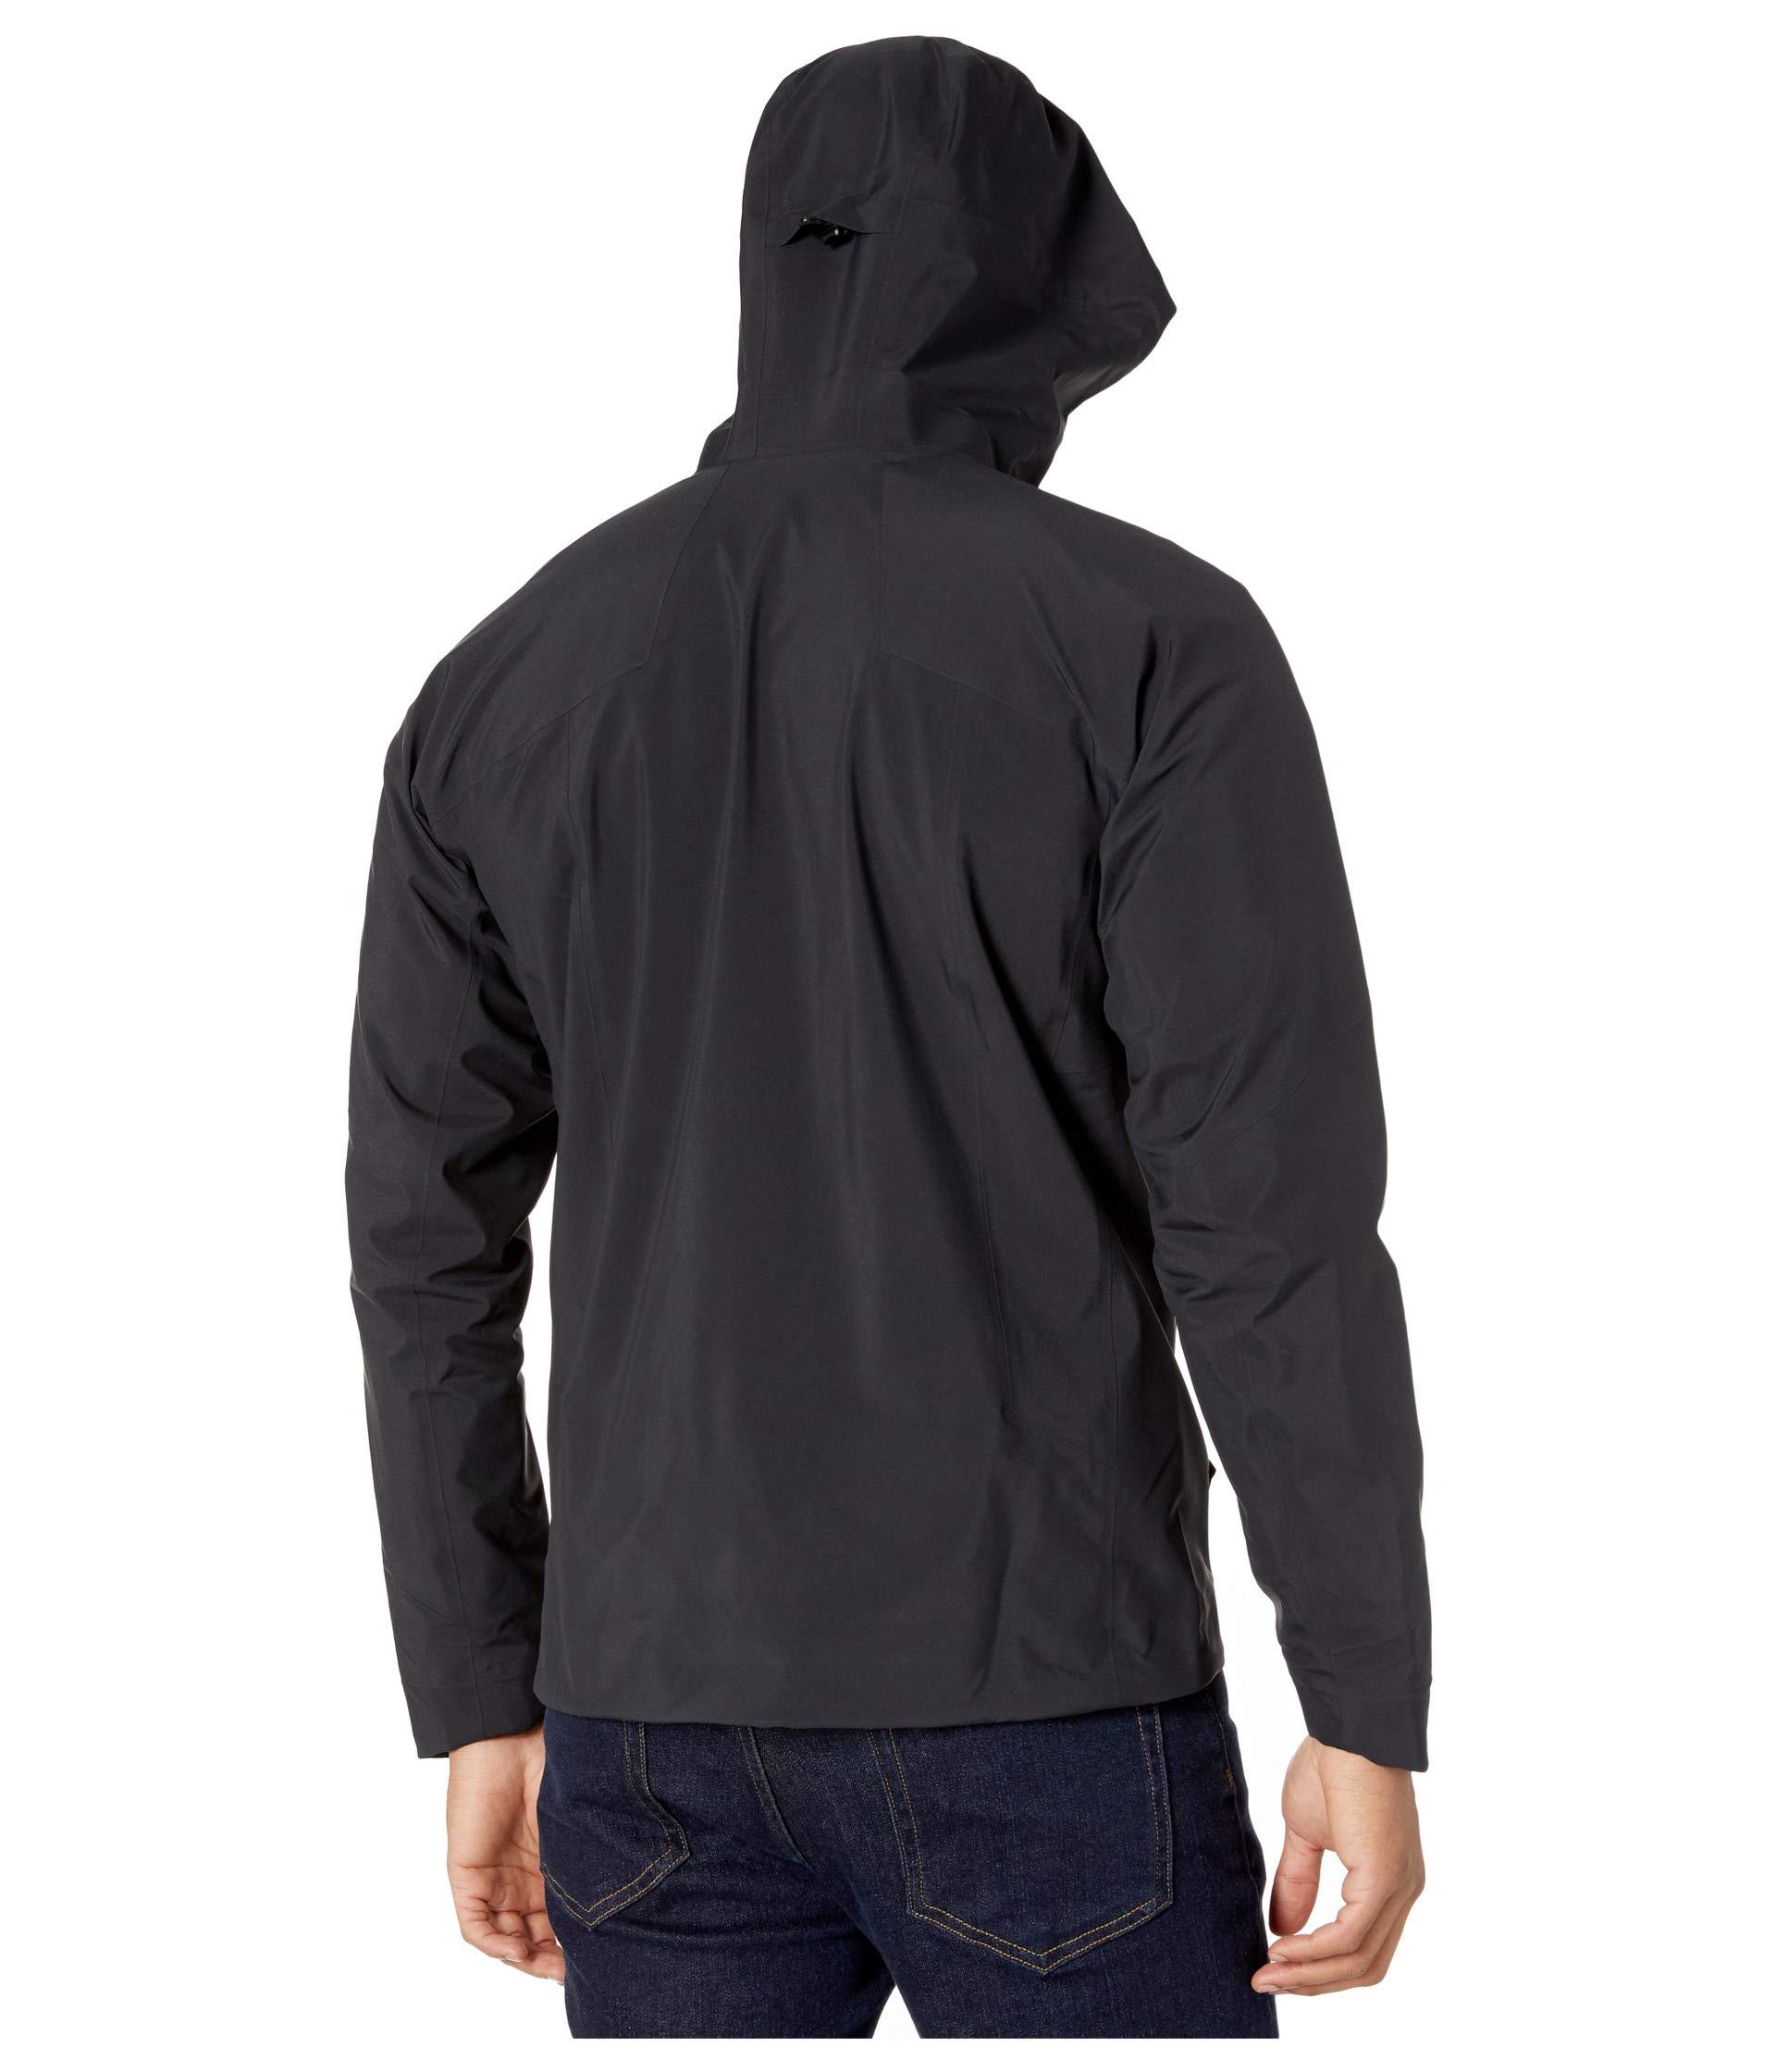 Arc'teryx Synthetic Fraser Jacket in Black for Men - Lyst